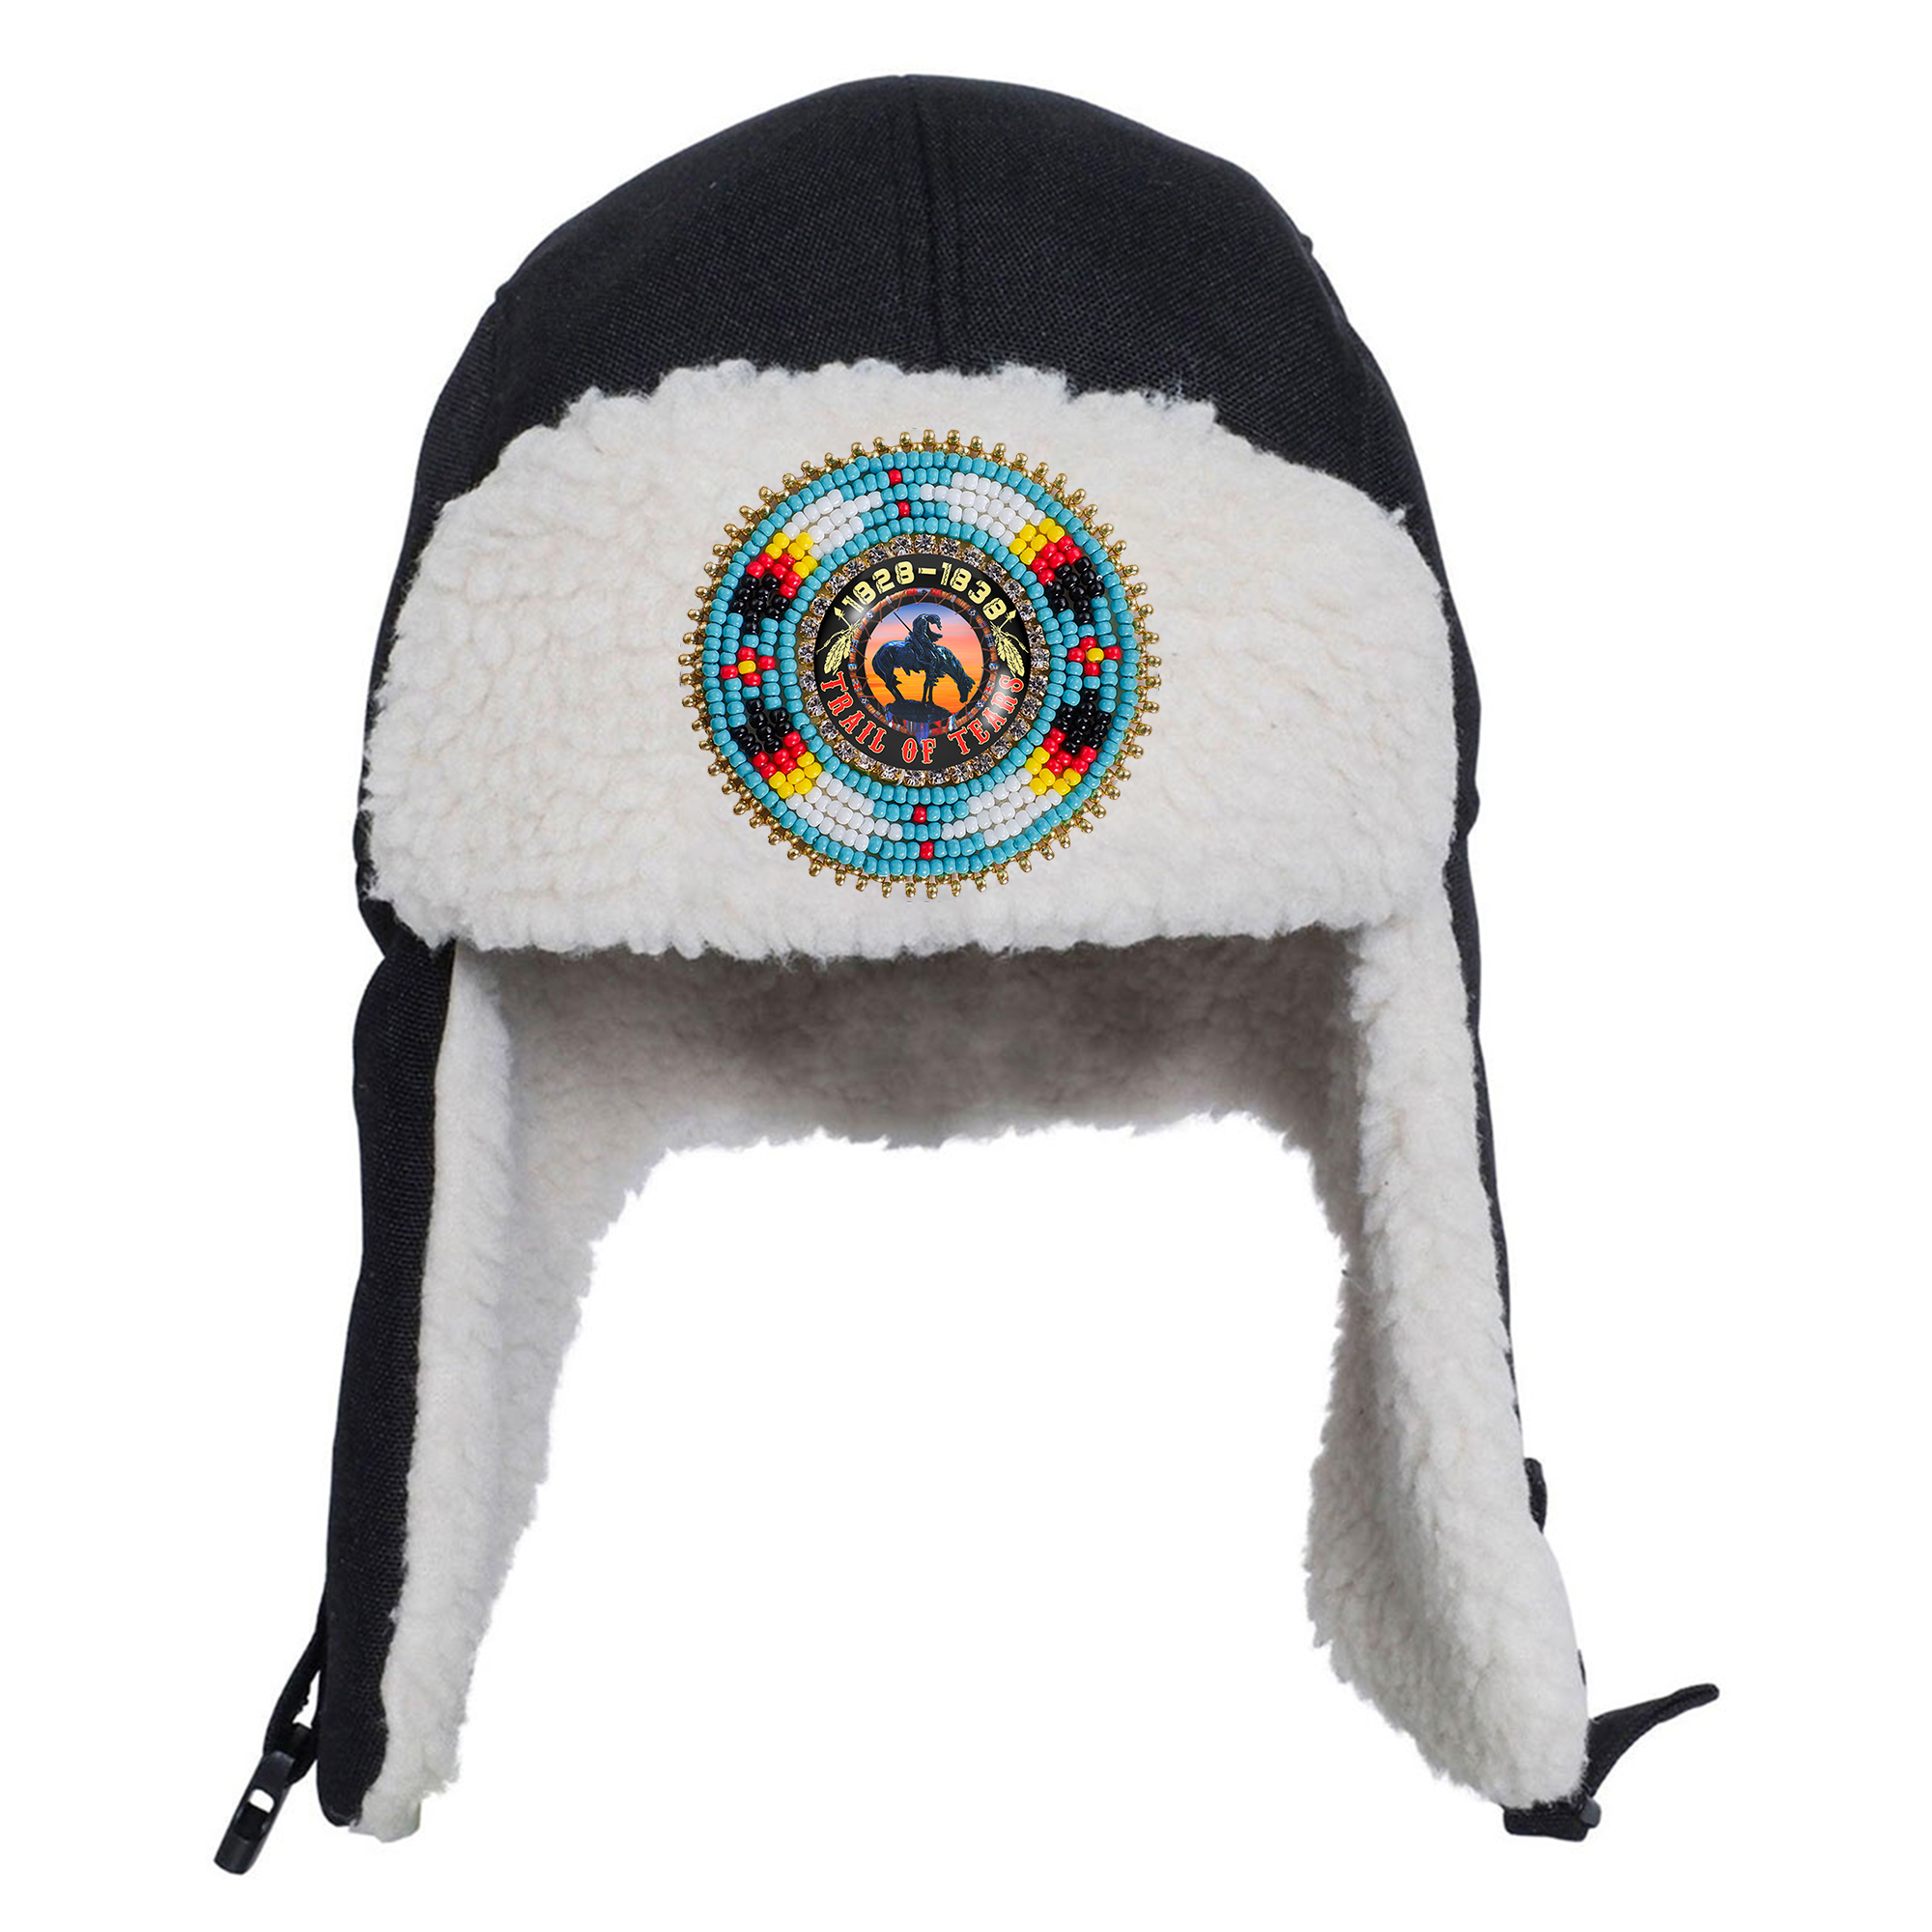 SALE 50% OFF - Trail of Tears Beaded Winter Trapper Hats For Men Women Native American Style